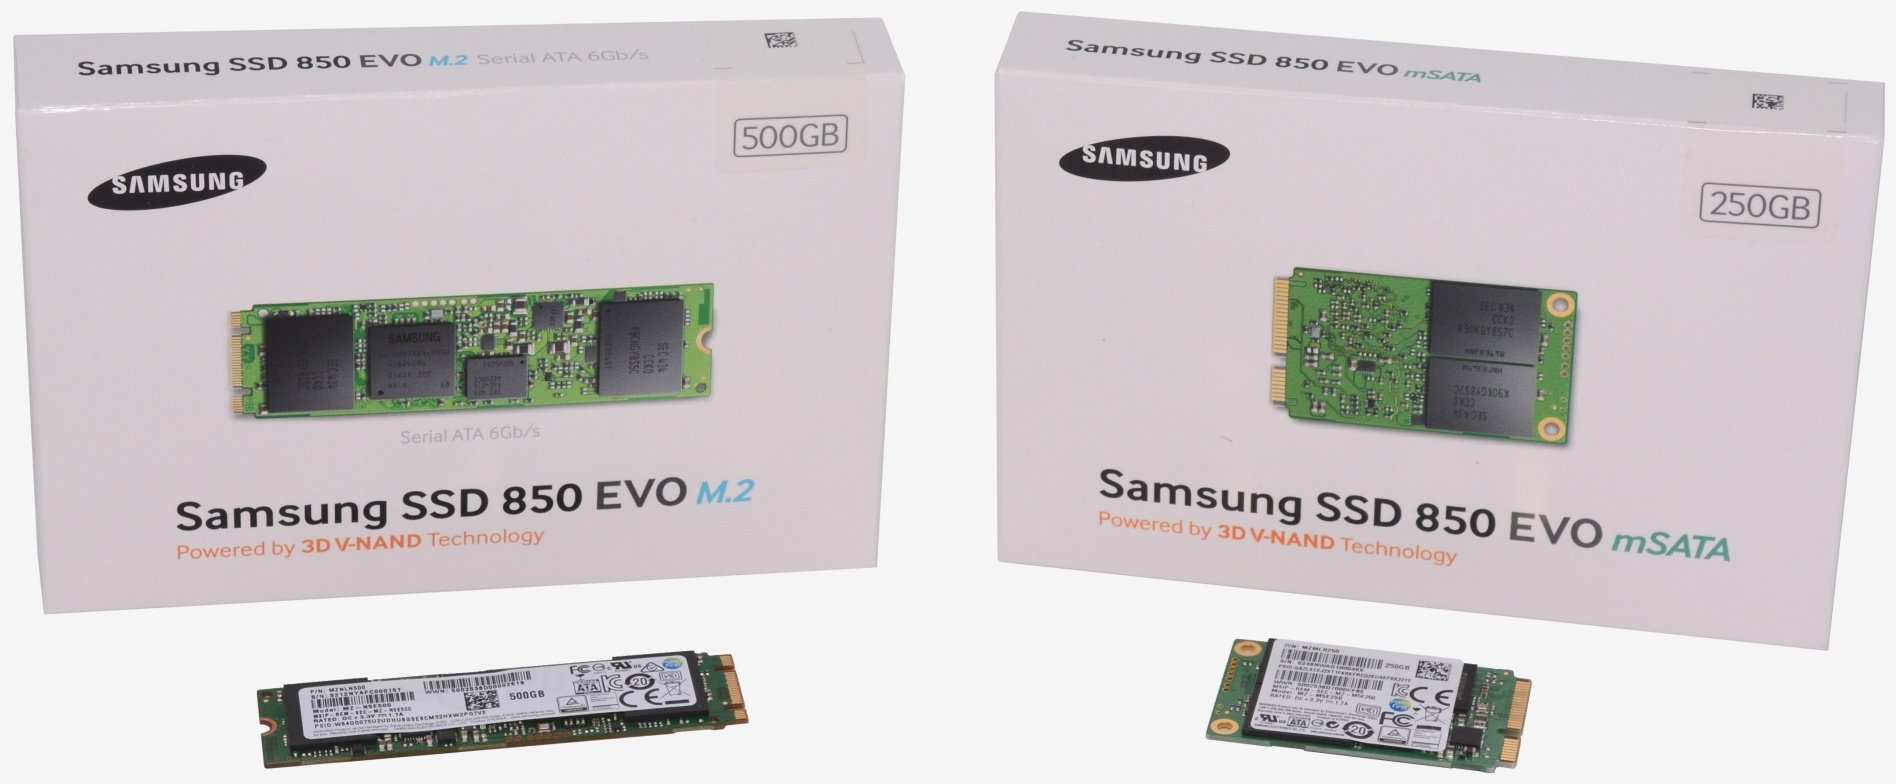 Gummi Vejrtrækning forord Samsung 850 Evo M.2 500GB & 850 Evo 250GB mSATA Review | TechSpot